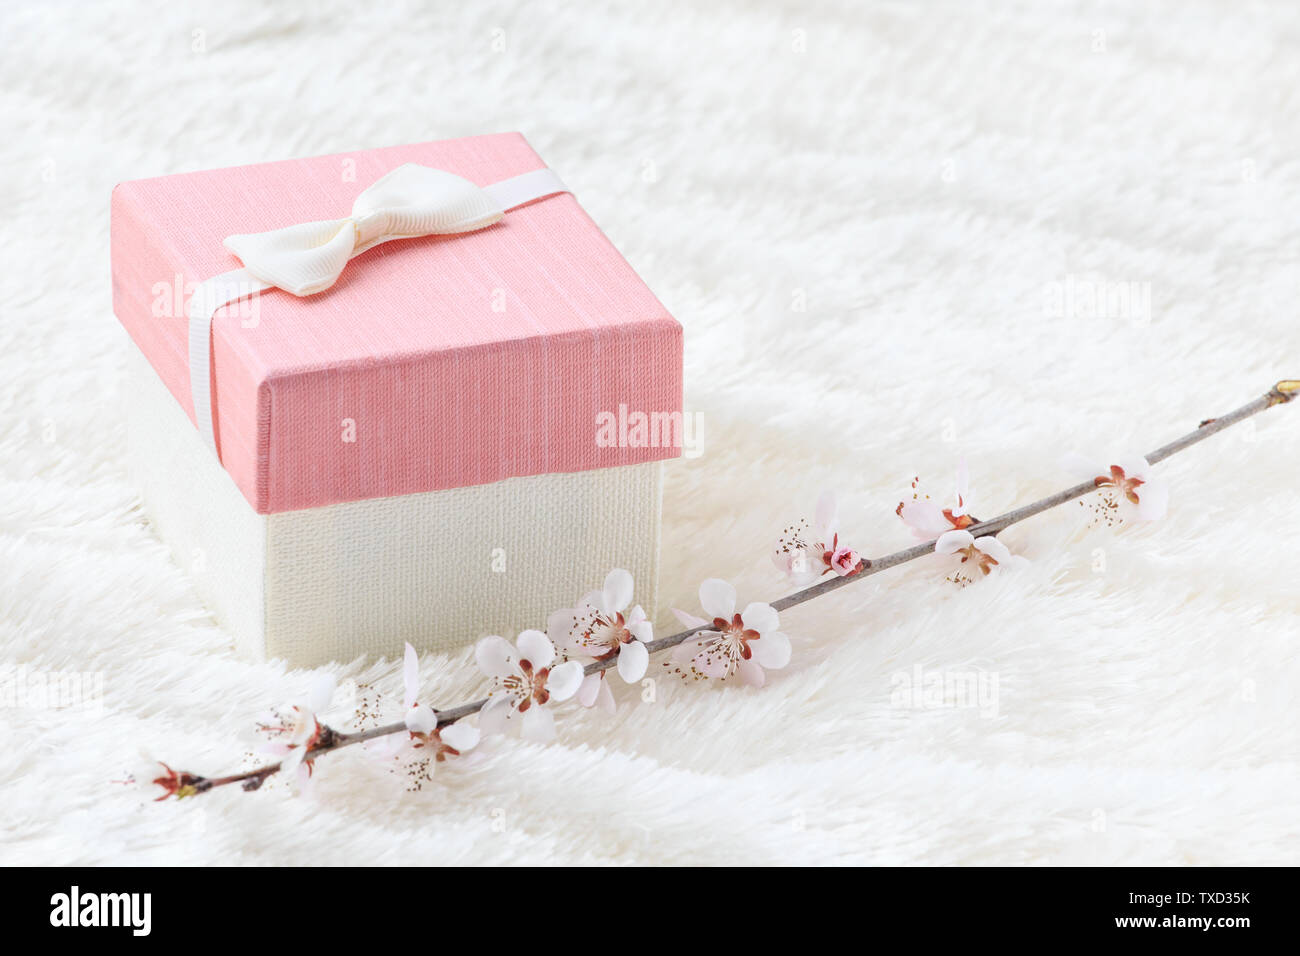 Exquisite gift box. Stock Photo